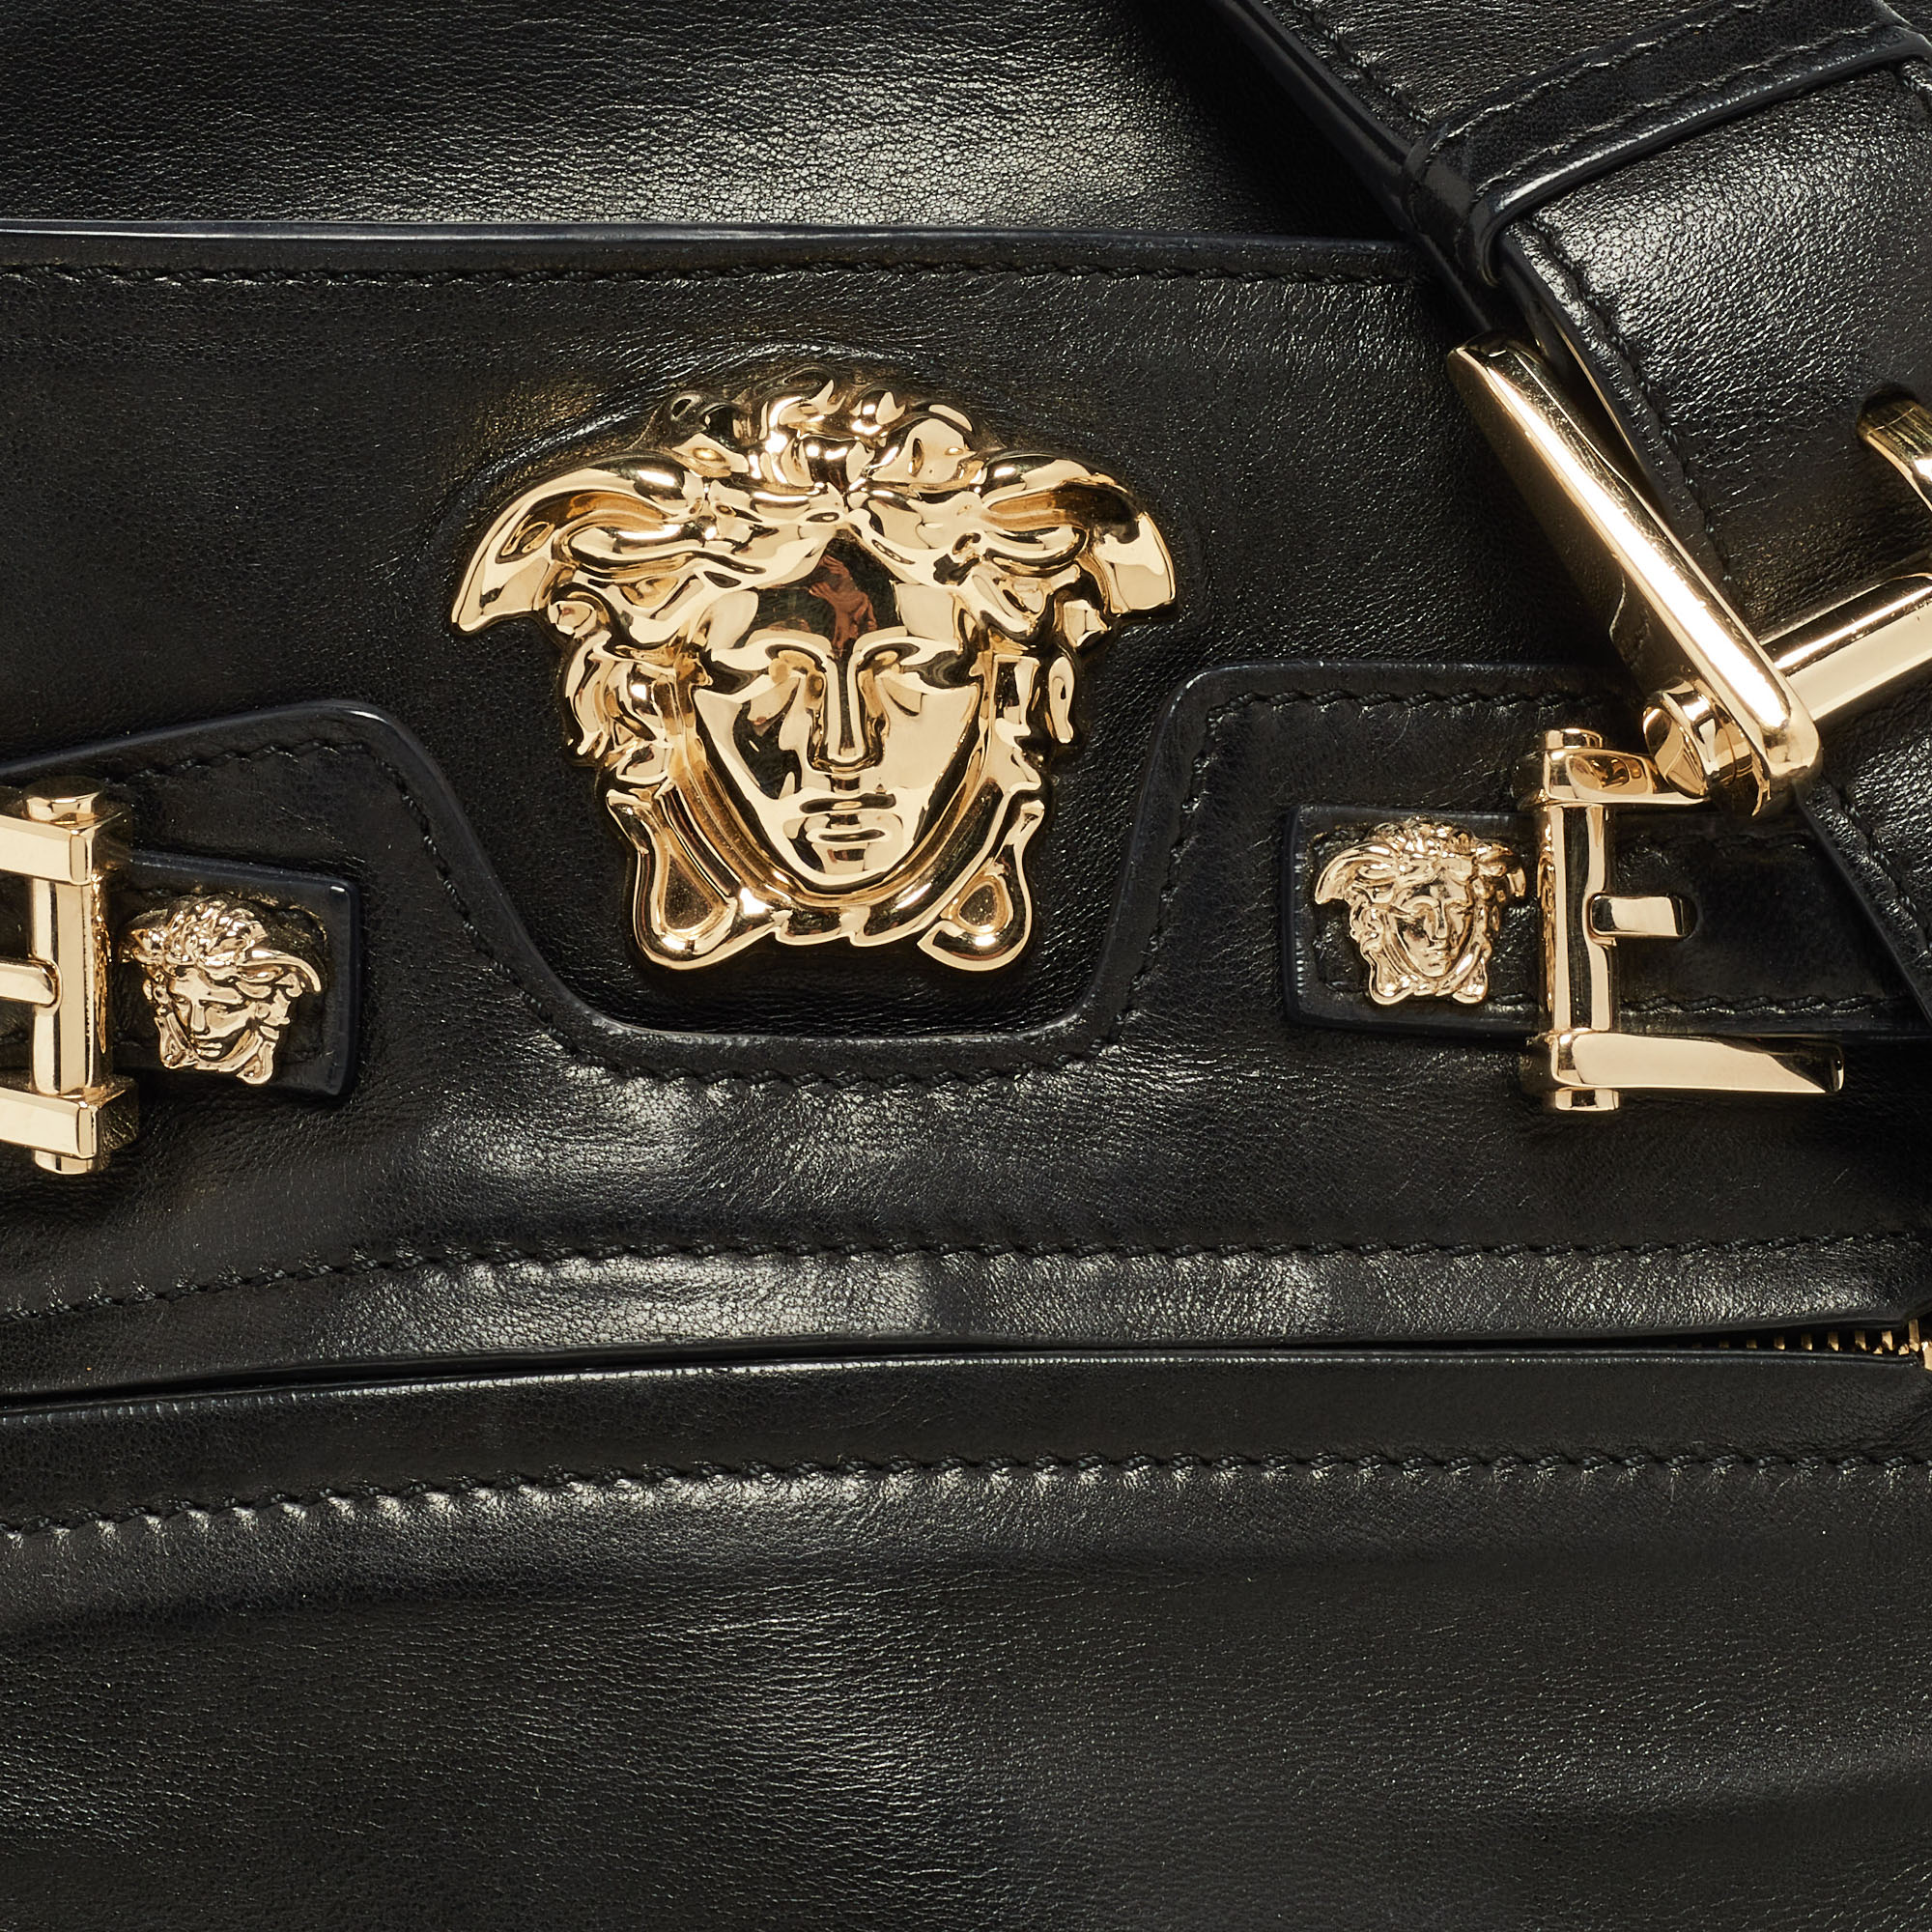 Versace Black Leather Donna Palazzo Shoulder Bag